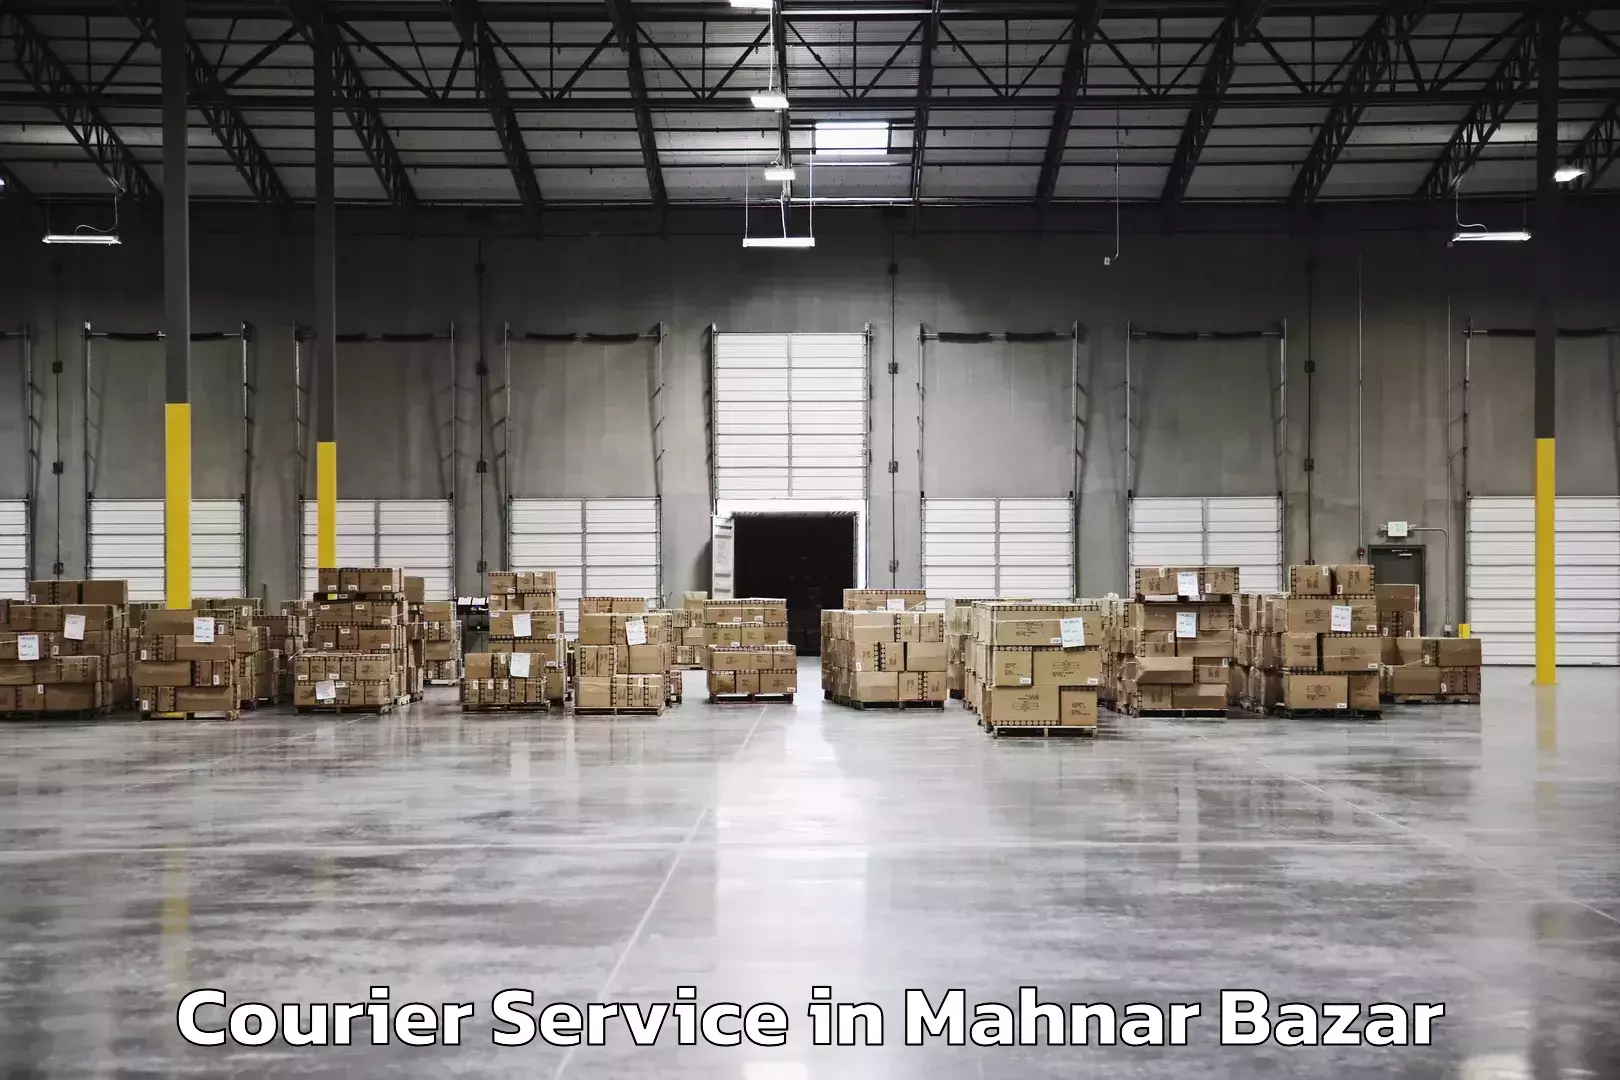 High-performance logistics in Mahnar Bazar